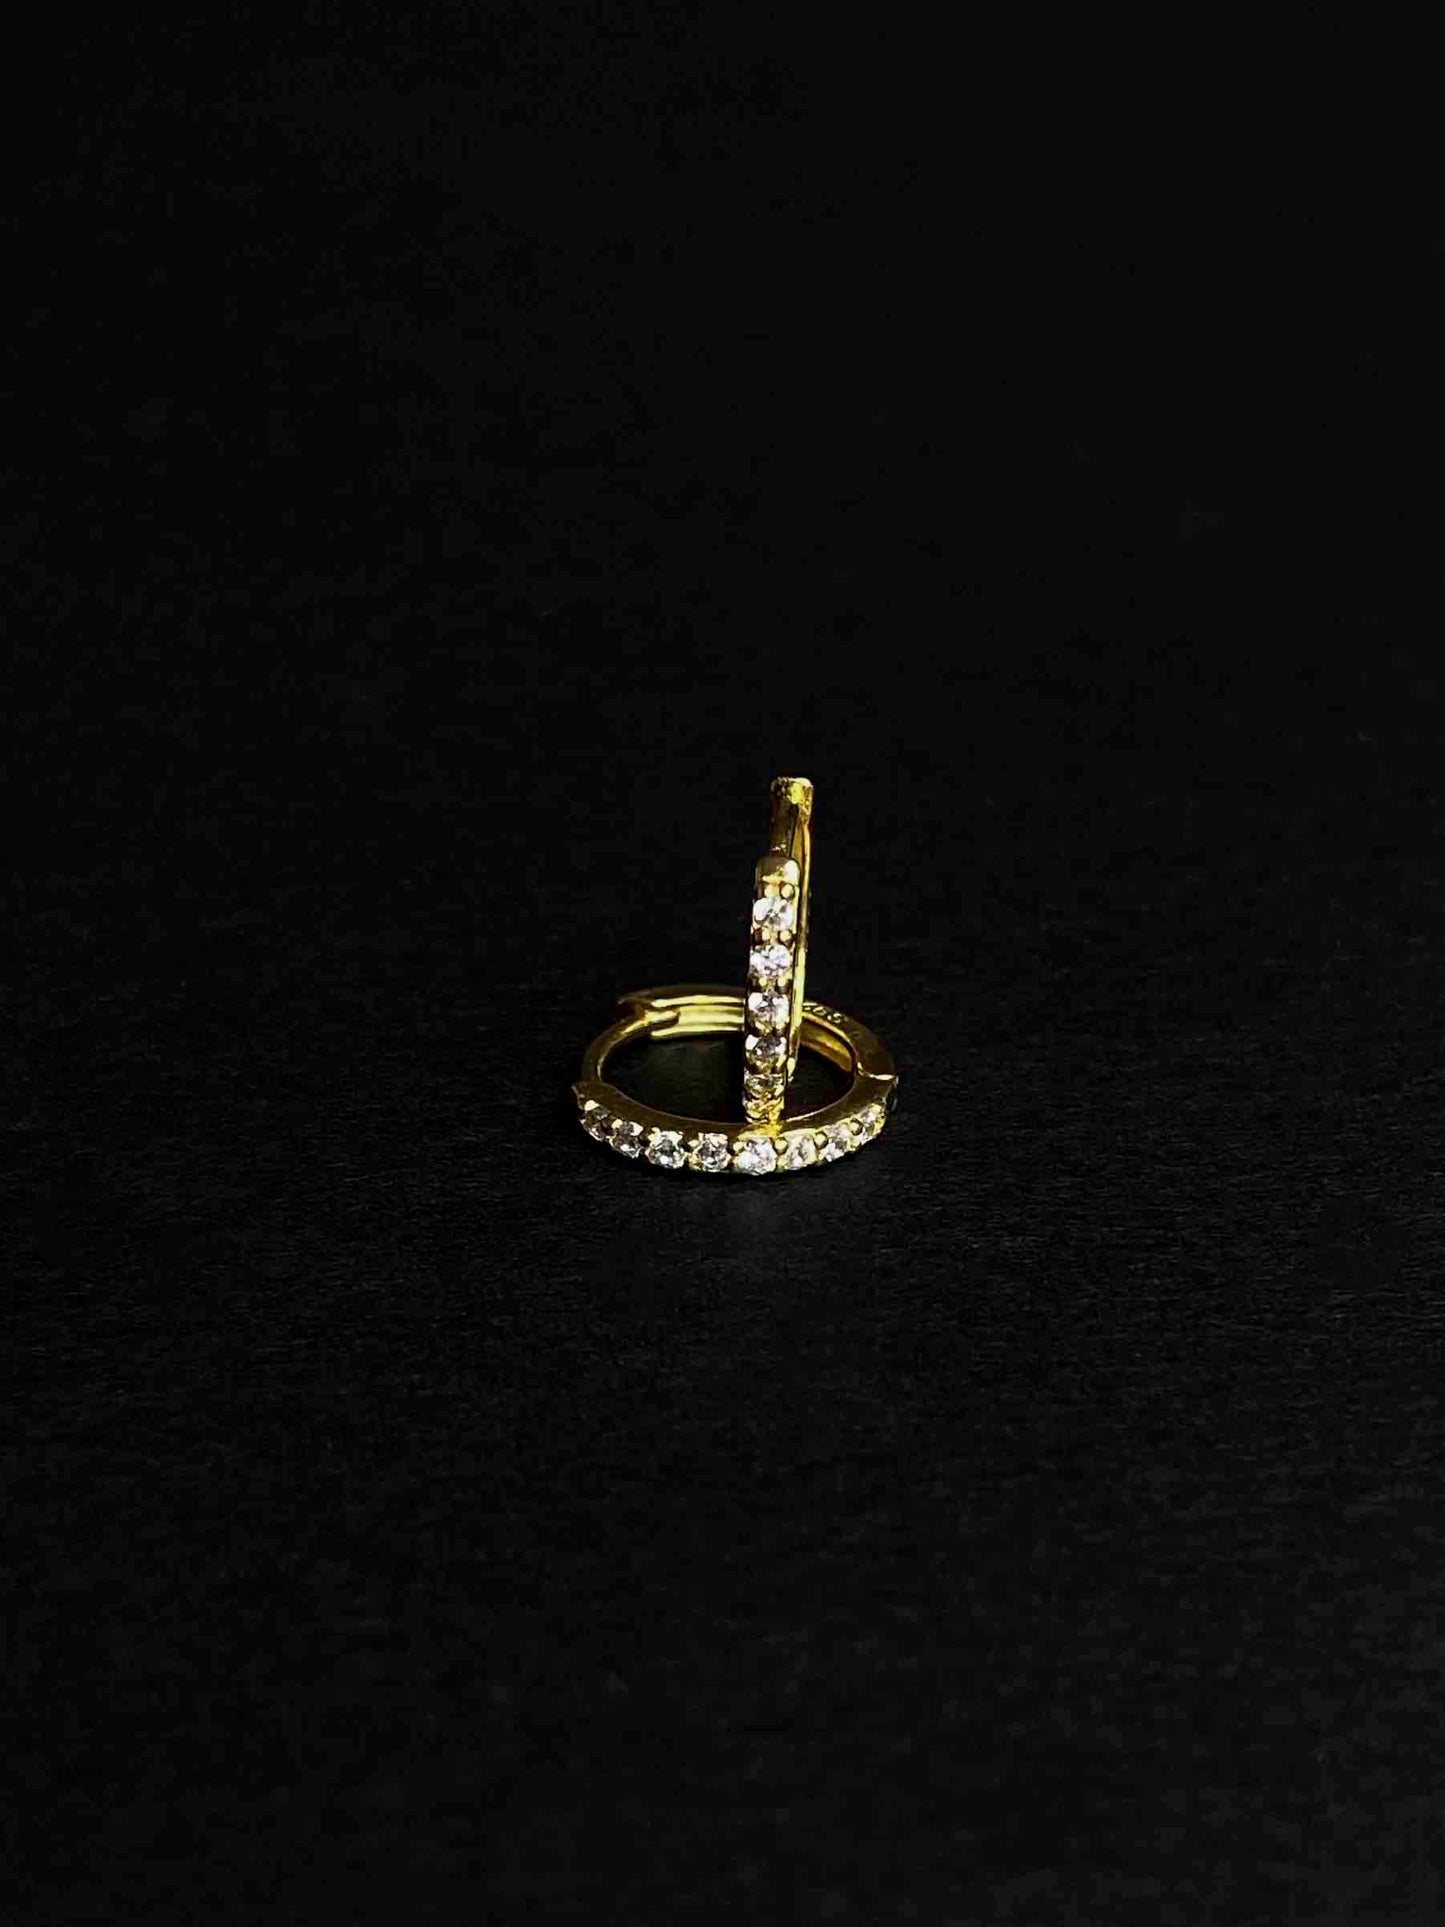 Gold-plated hoop earrings with zirconia stones.